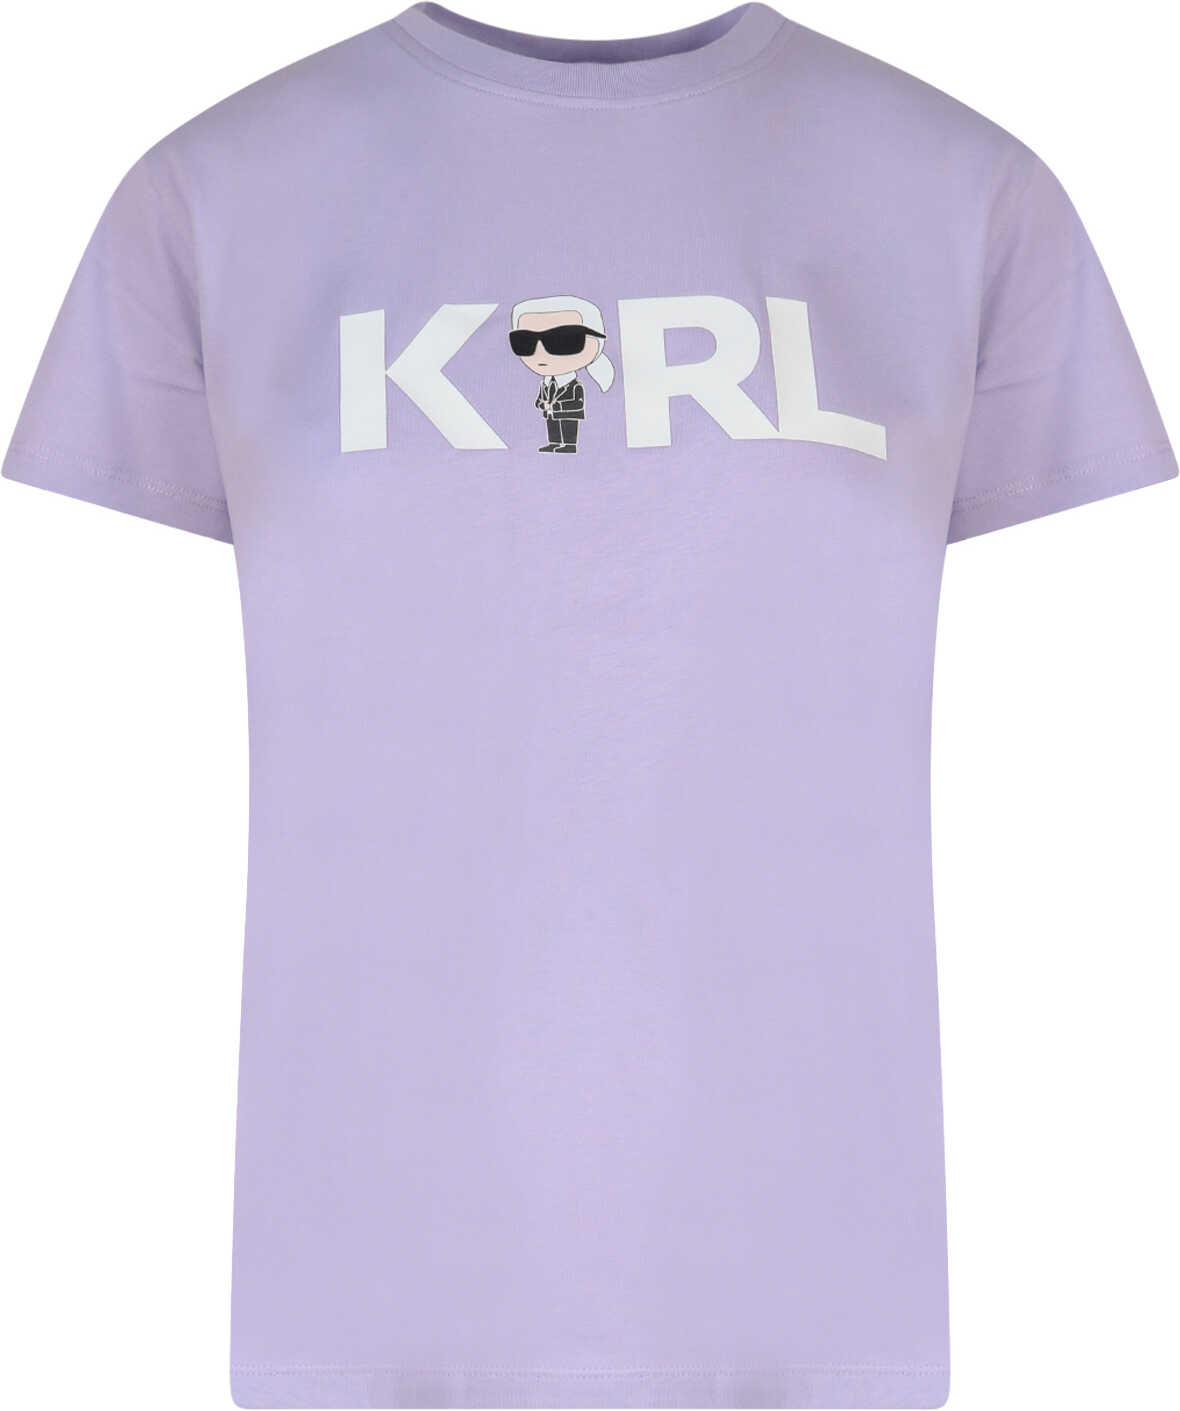 Karl Lagerfeld T-Shirt Purple